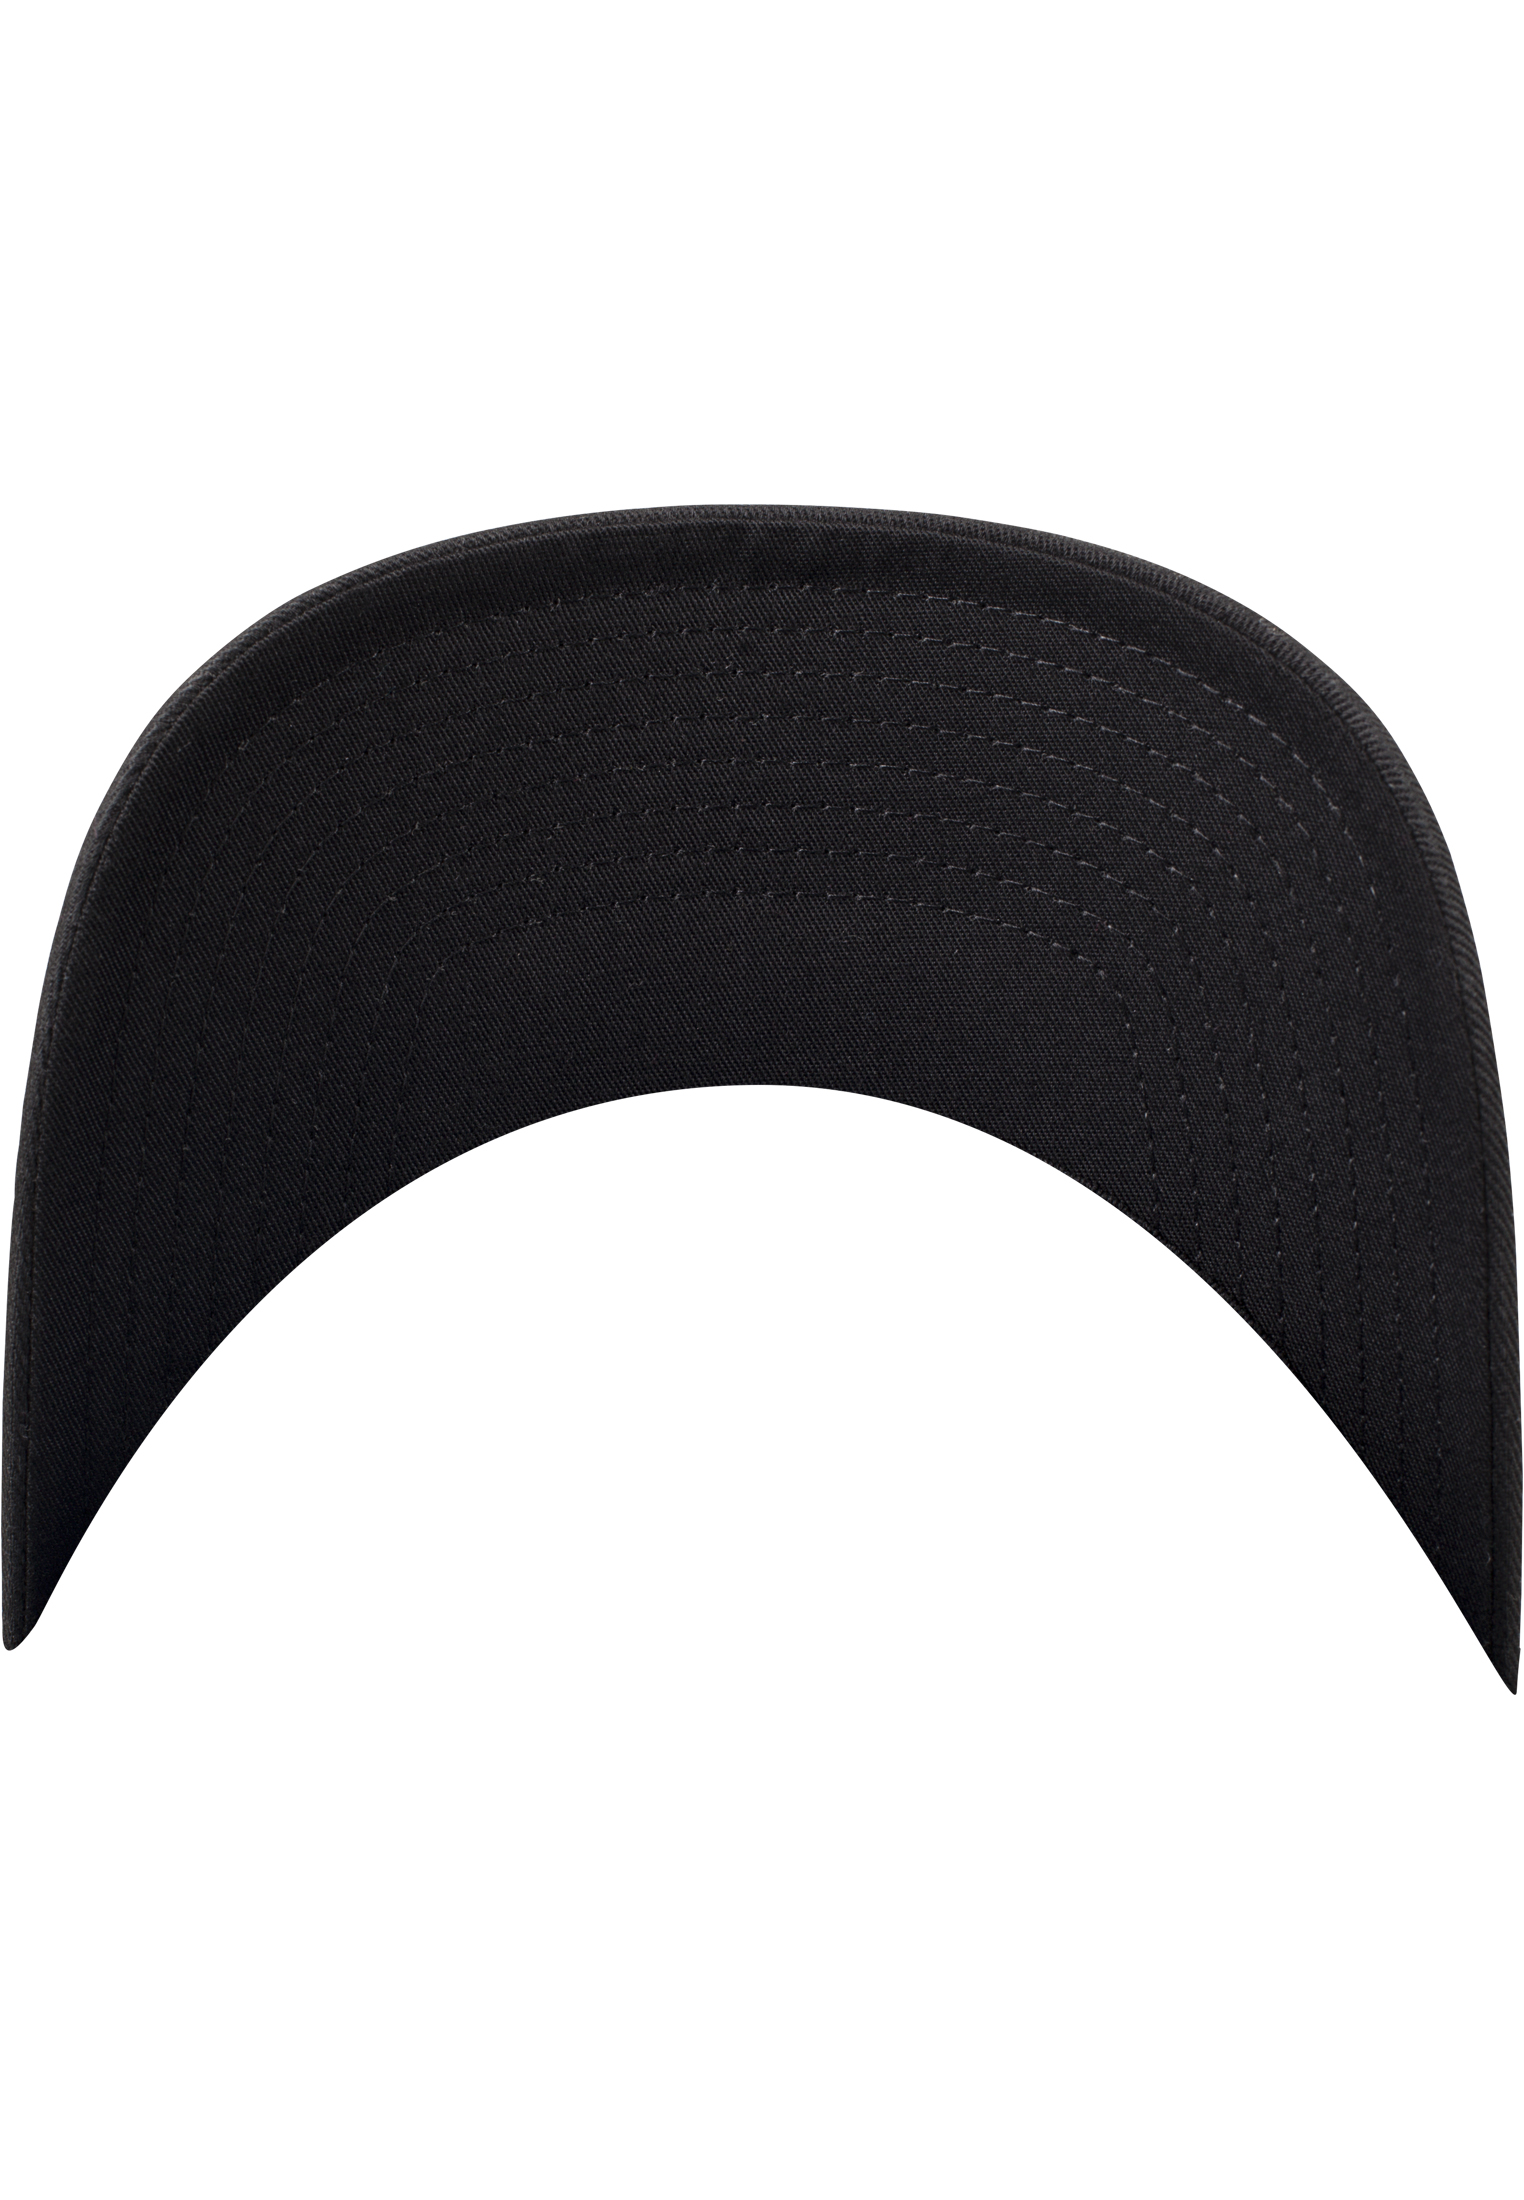 Dad Caps Flexfit Cotton Twill Dad Cap in Farbe black